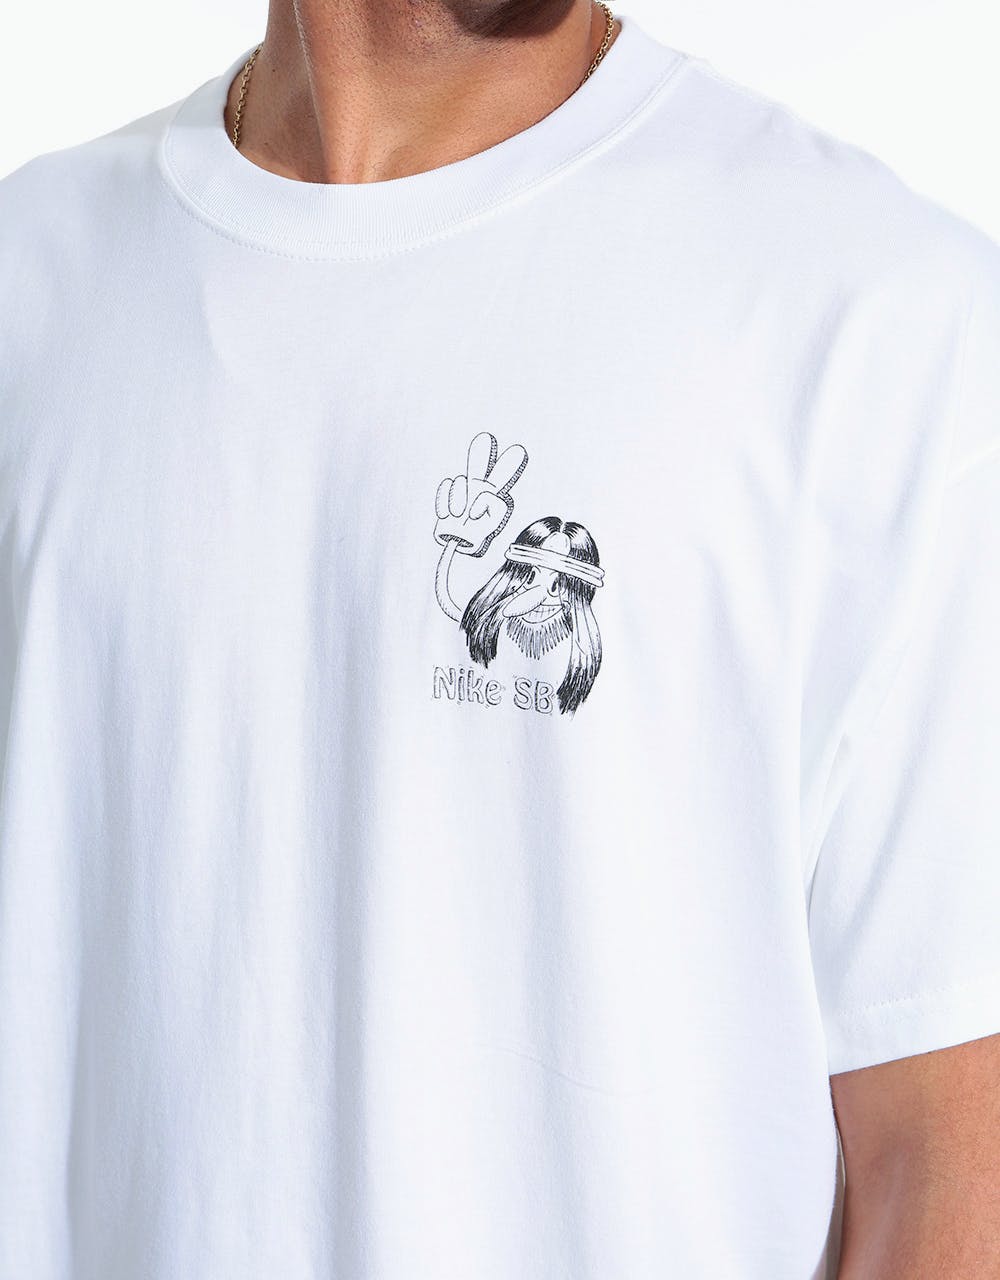 Nike SB Duder T-Shirt - White/Black